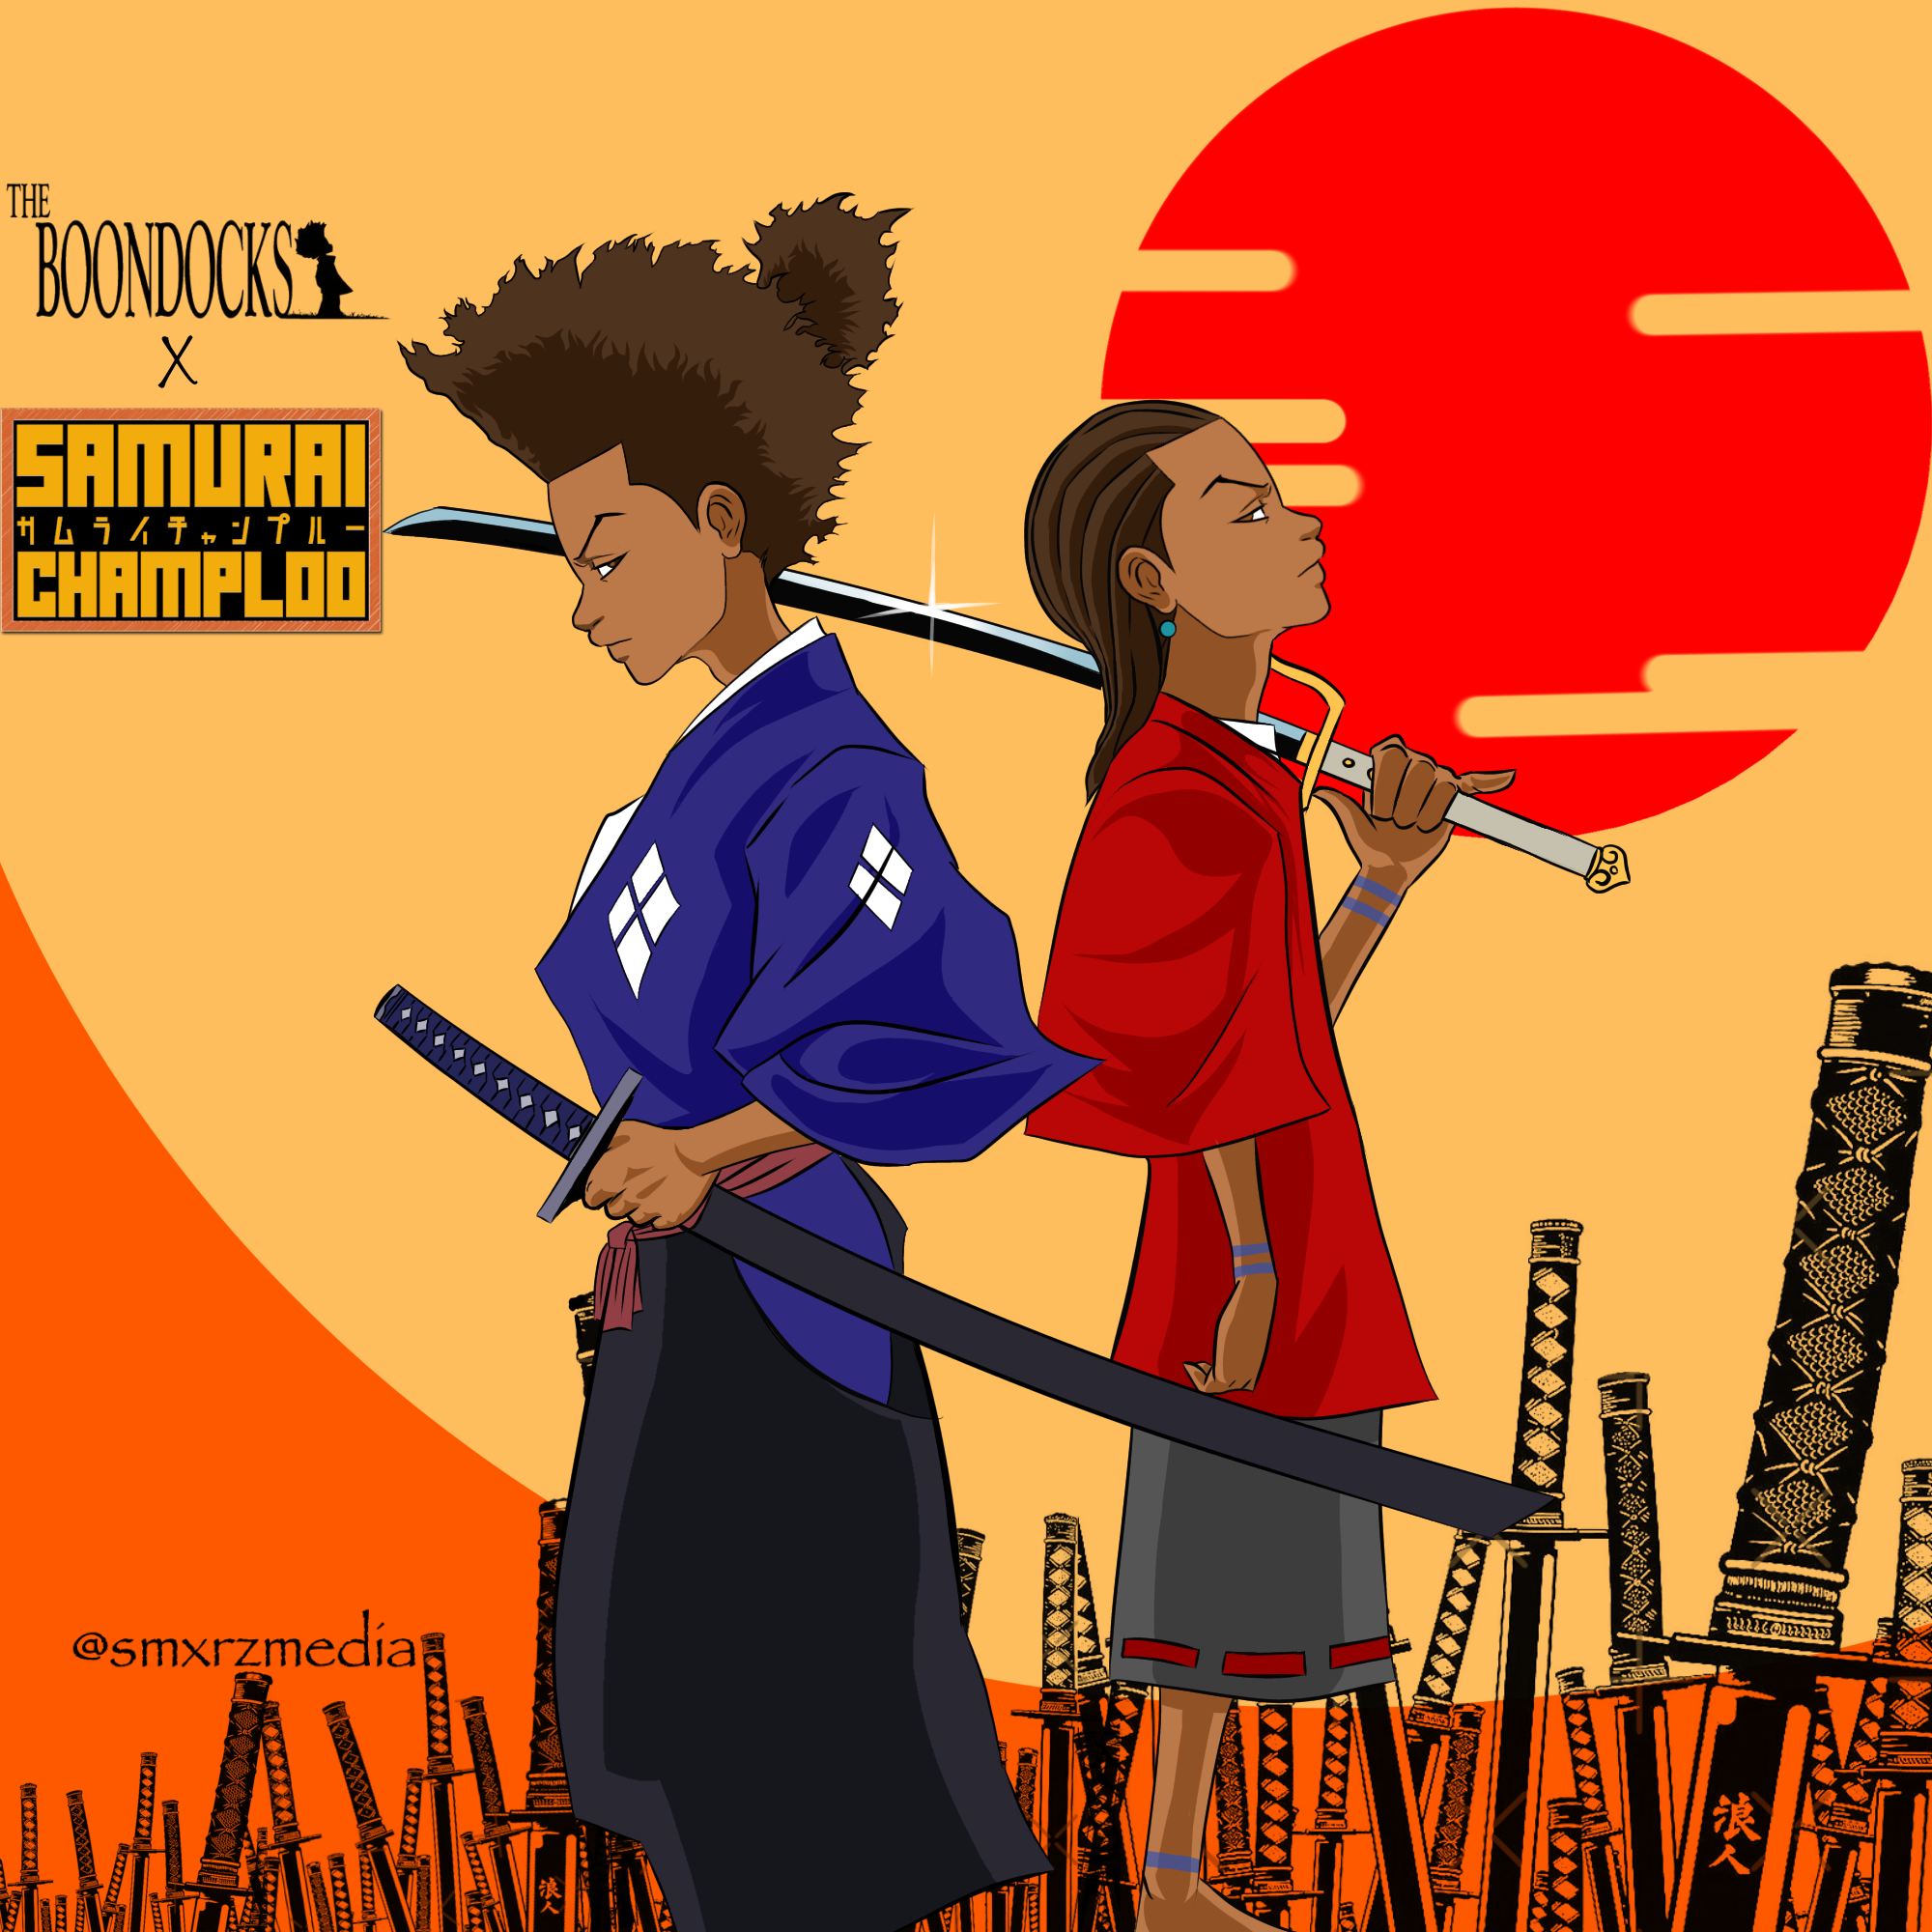 The Boondocks X Afro Samurai” Crossover art…